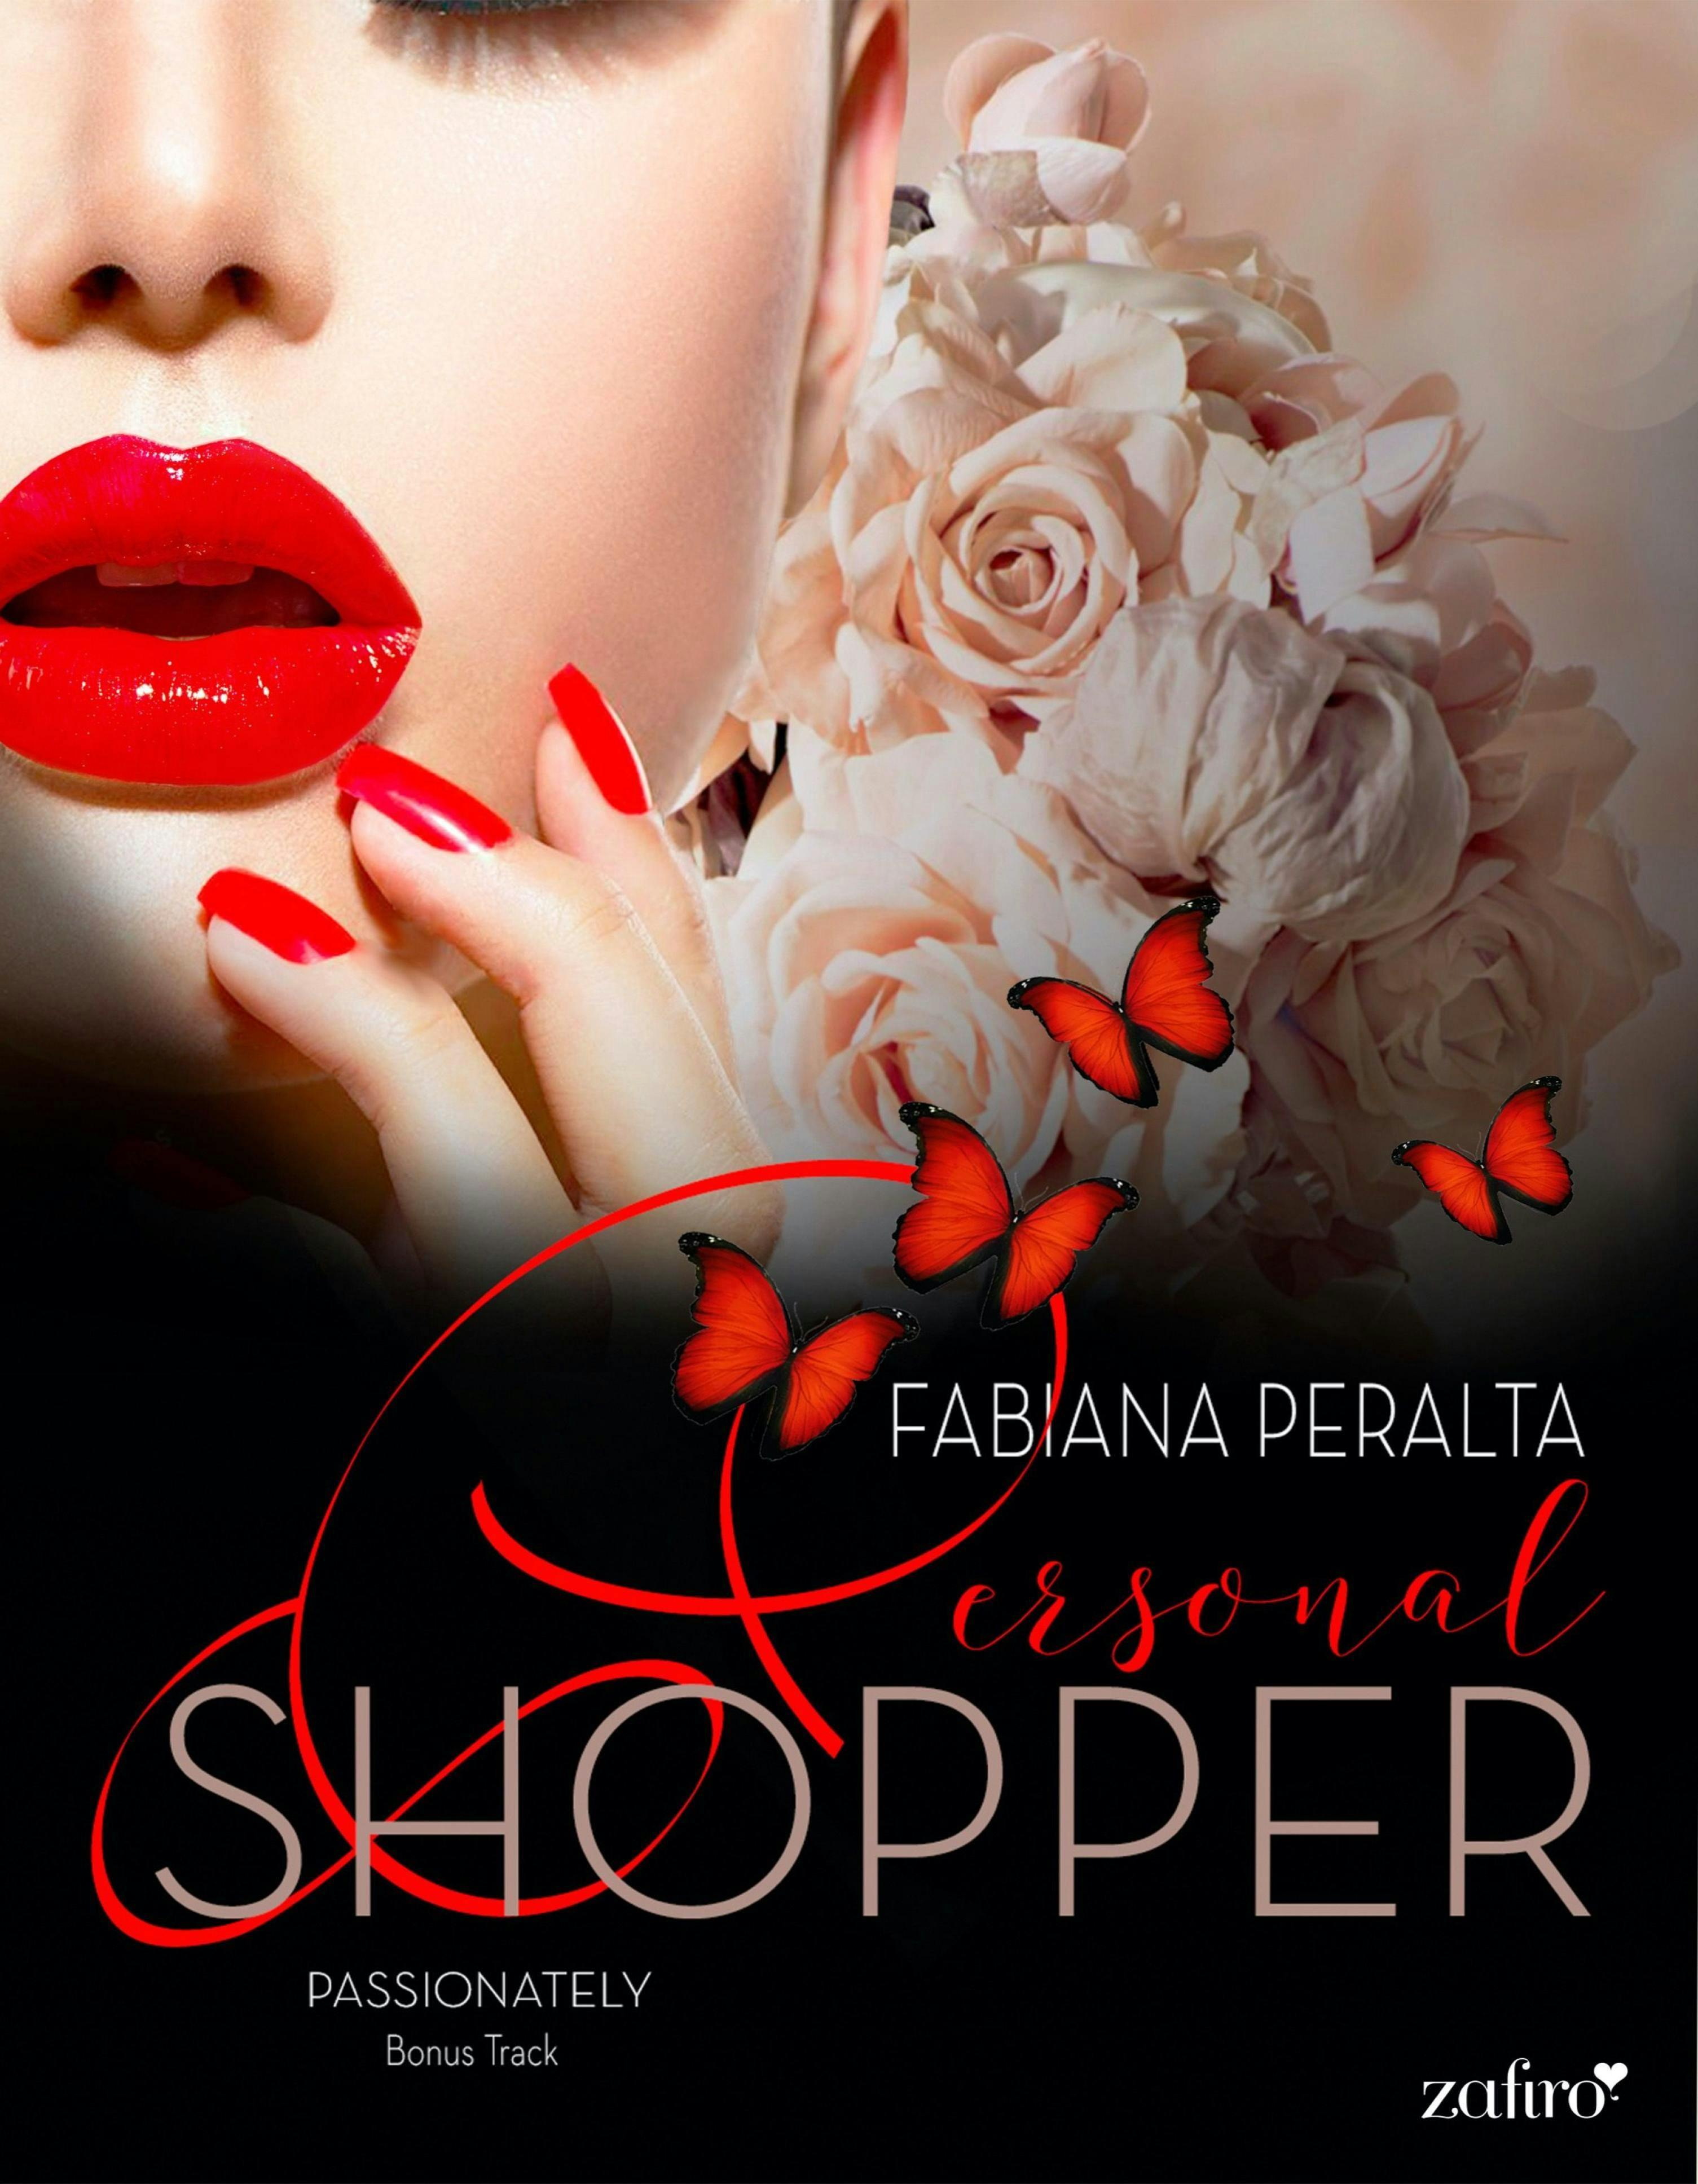 Passionately- Personal shopper- Bonus Track - Fabiana Peralta